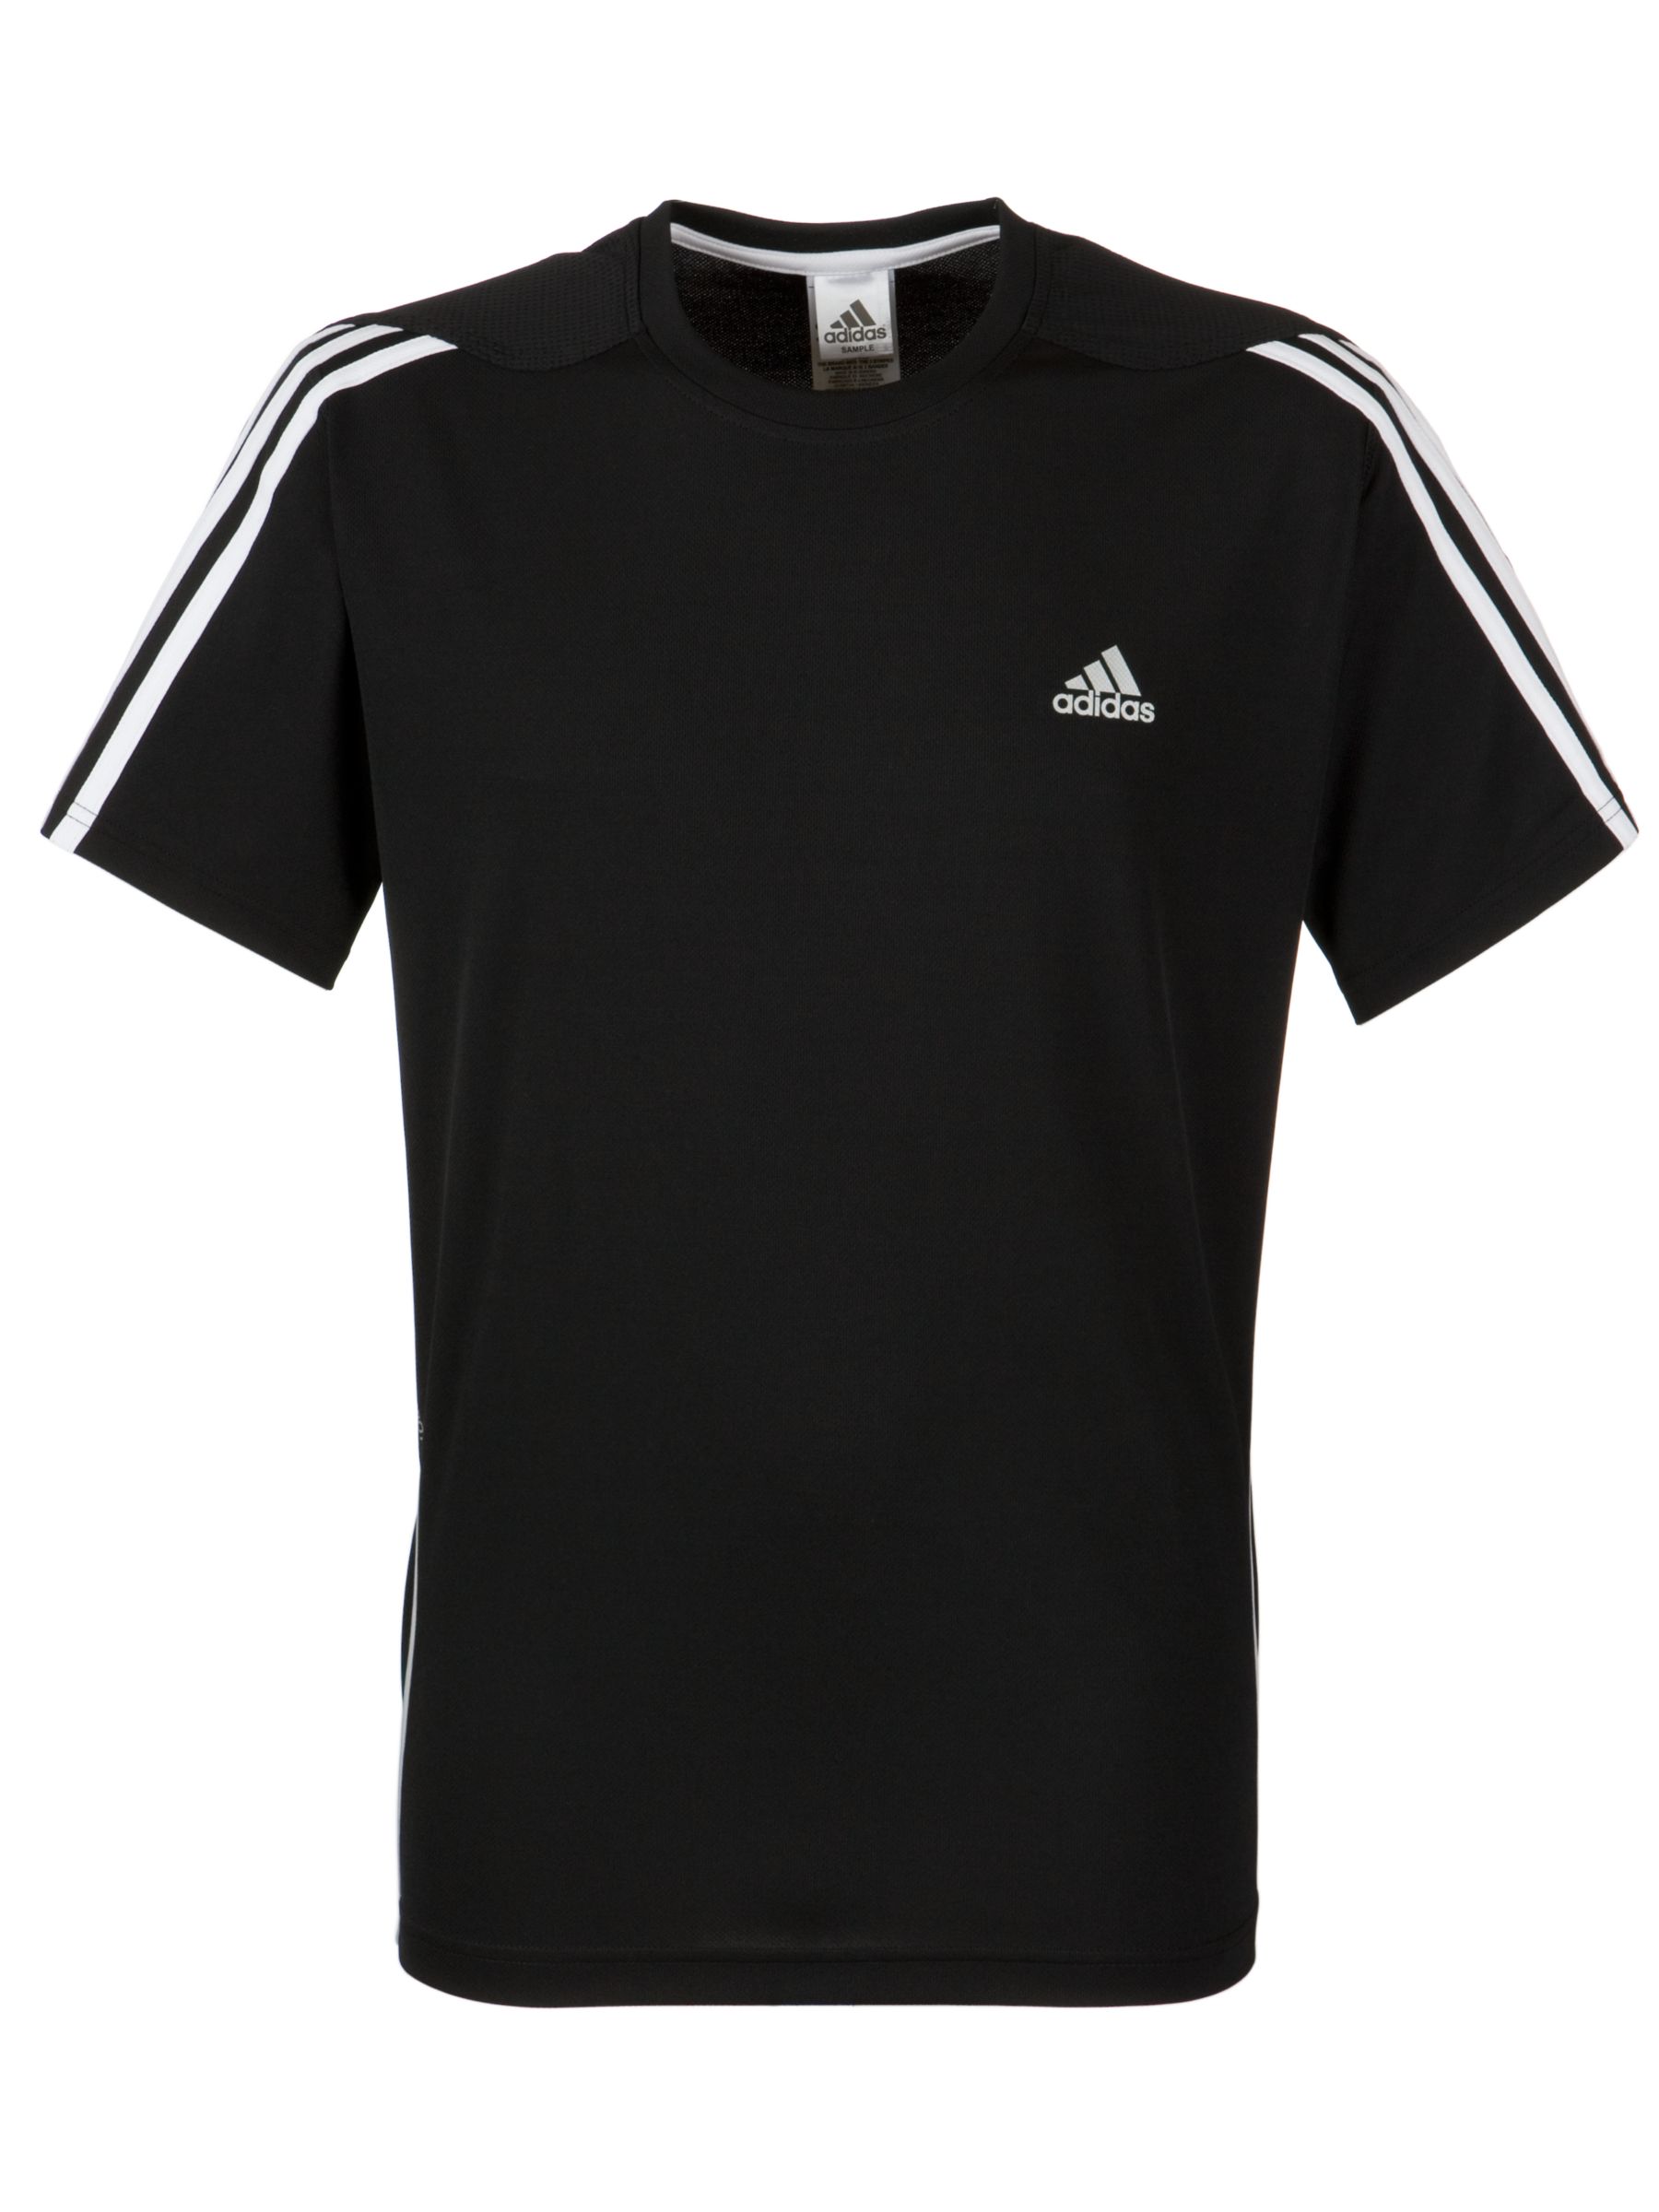 Adidas Response Short Sleeve T-Shirt, Black